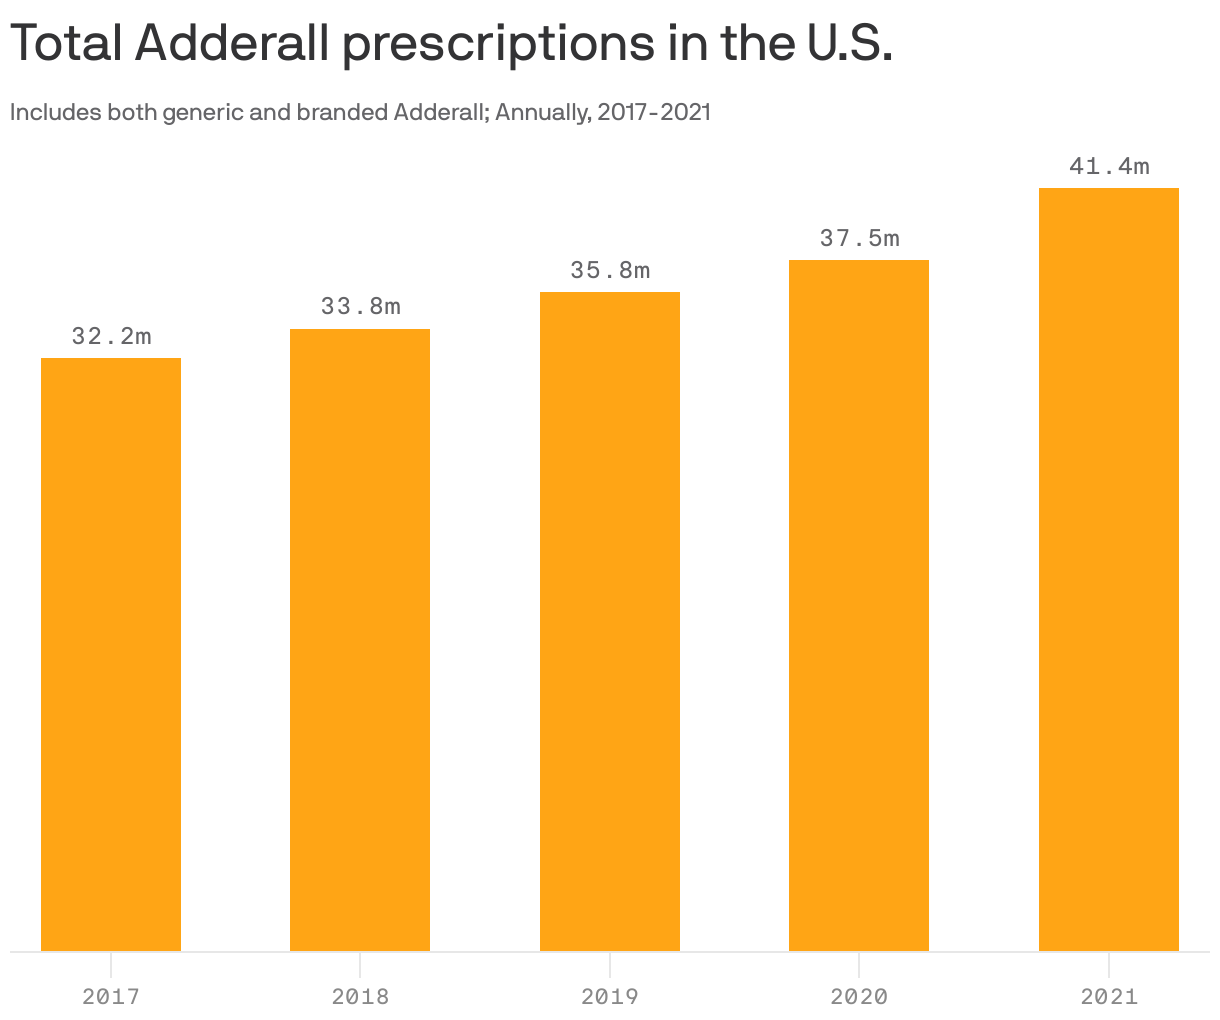 Total Adderall prescriptions in the U.S.